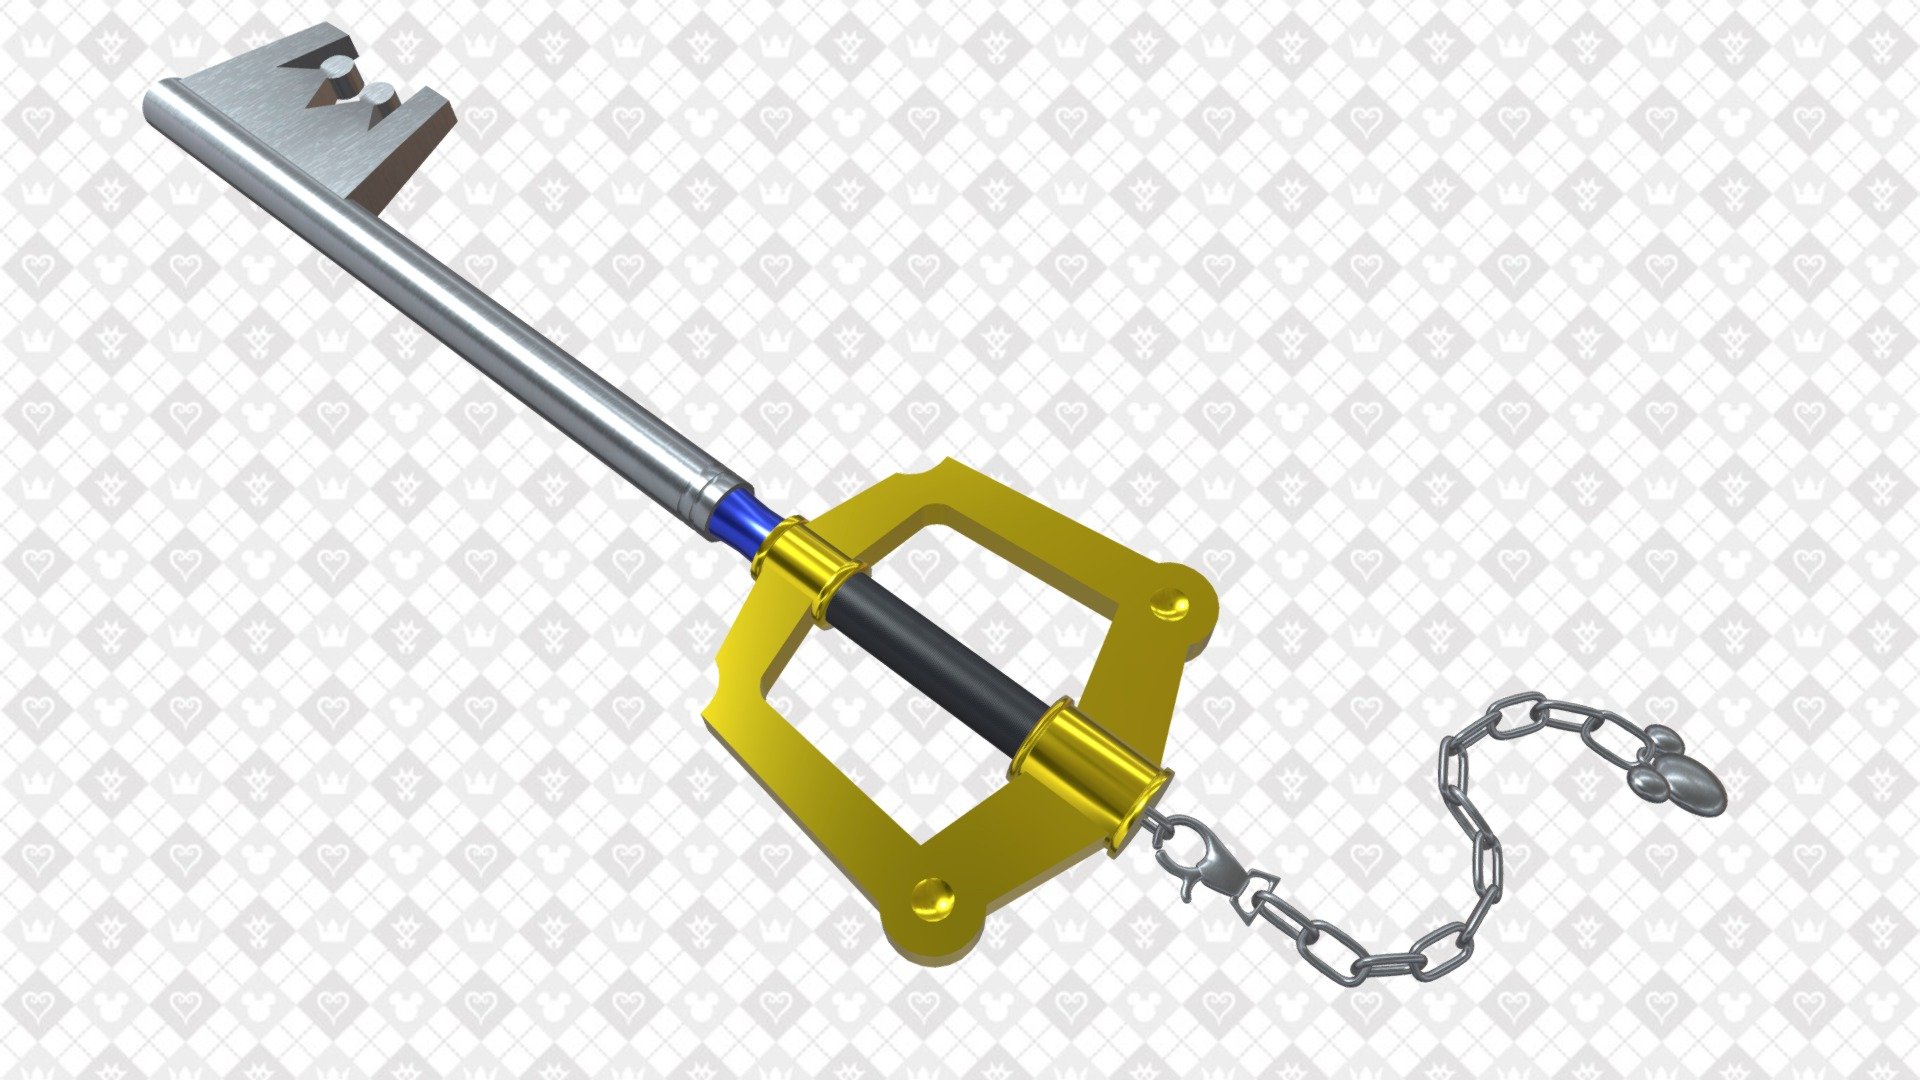 Kingdom Key keyblade from Kingdom Hearts